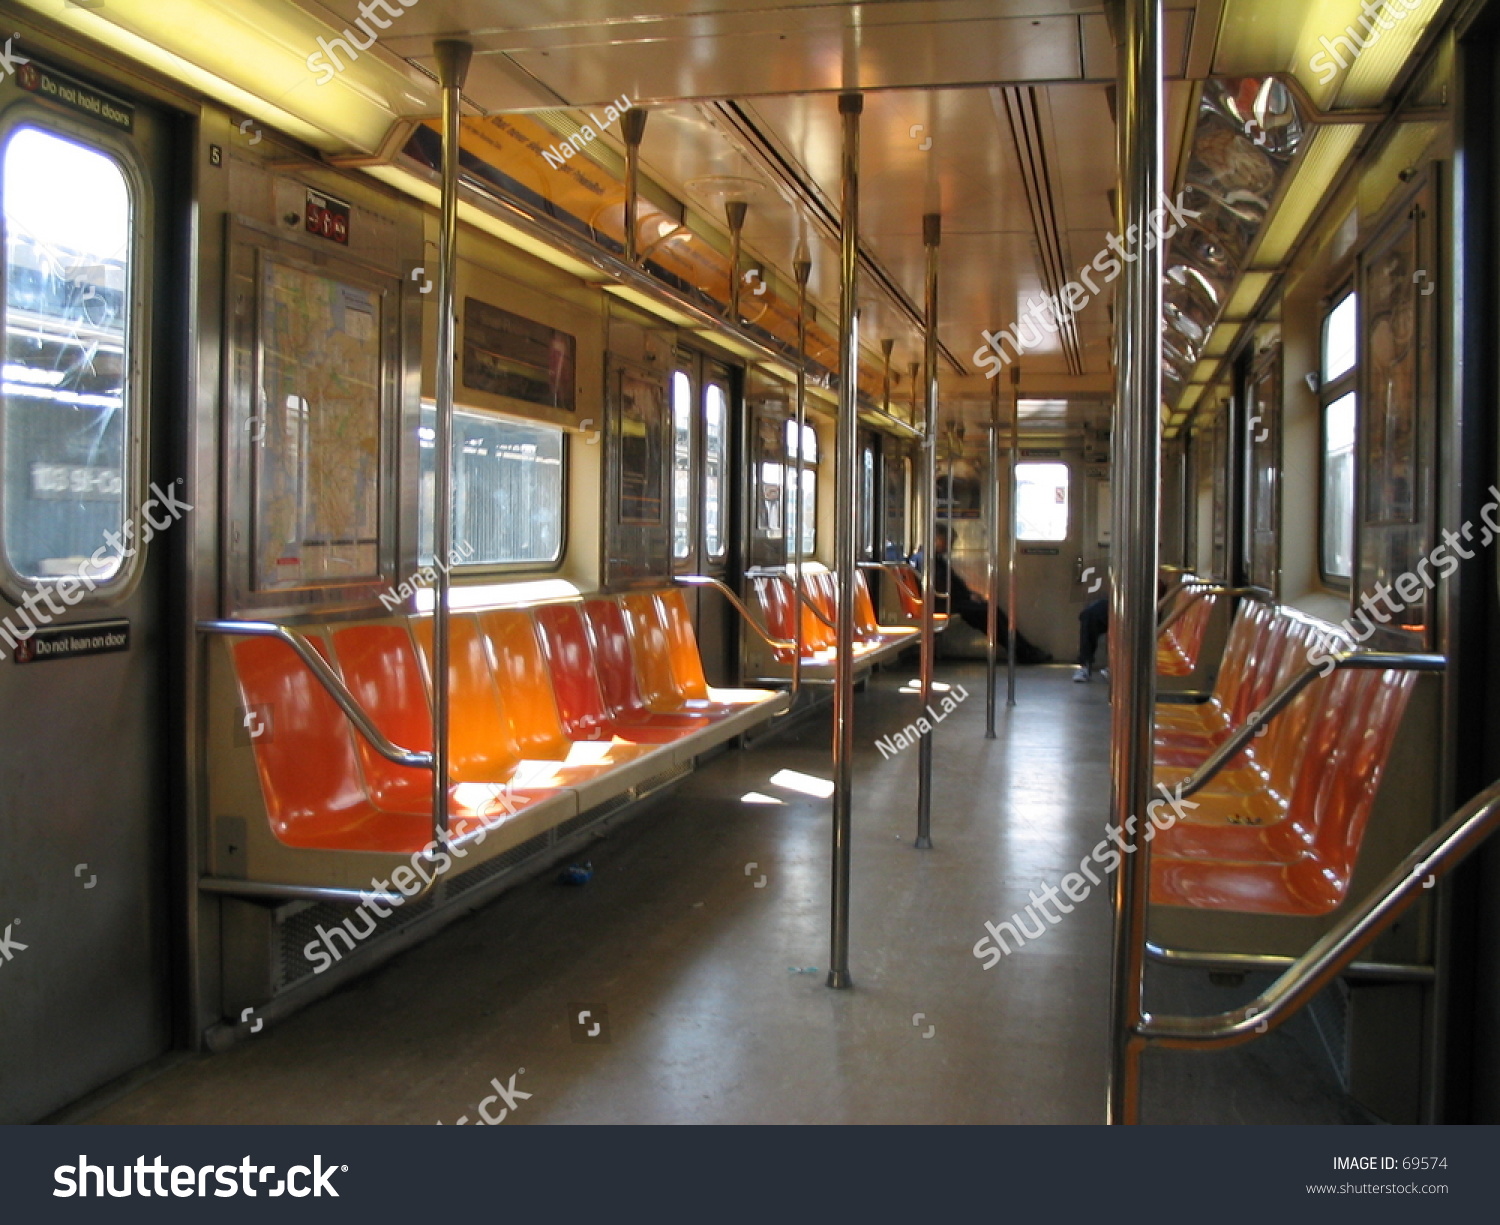 stock-photo-interior-of-subway-car-in-new-york-city-69574.jpg